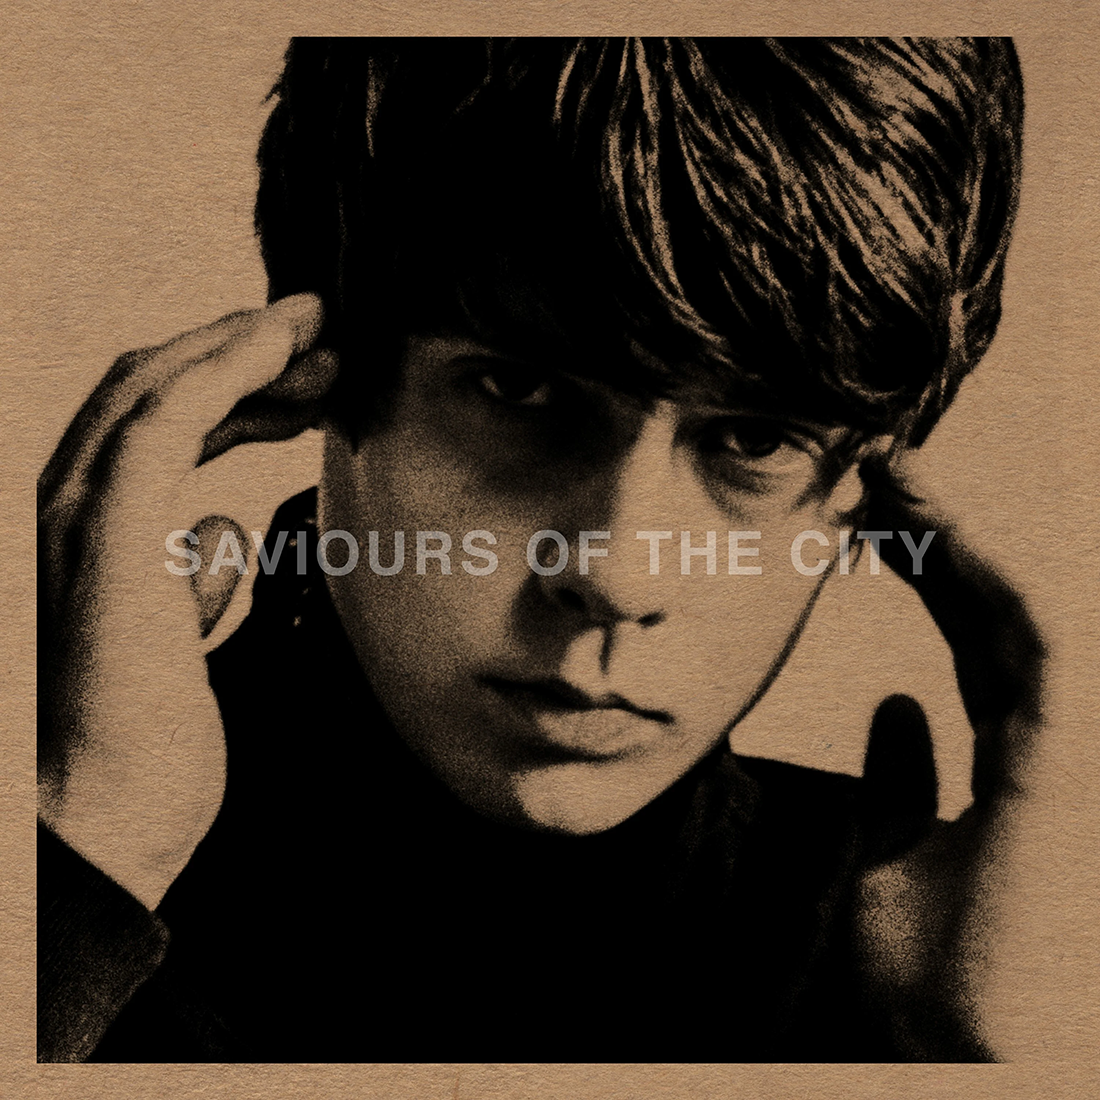 Saviours of the City: Vinyl 7" Single